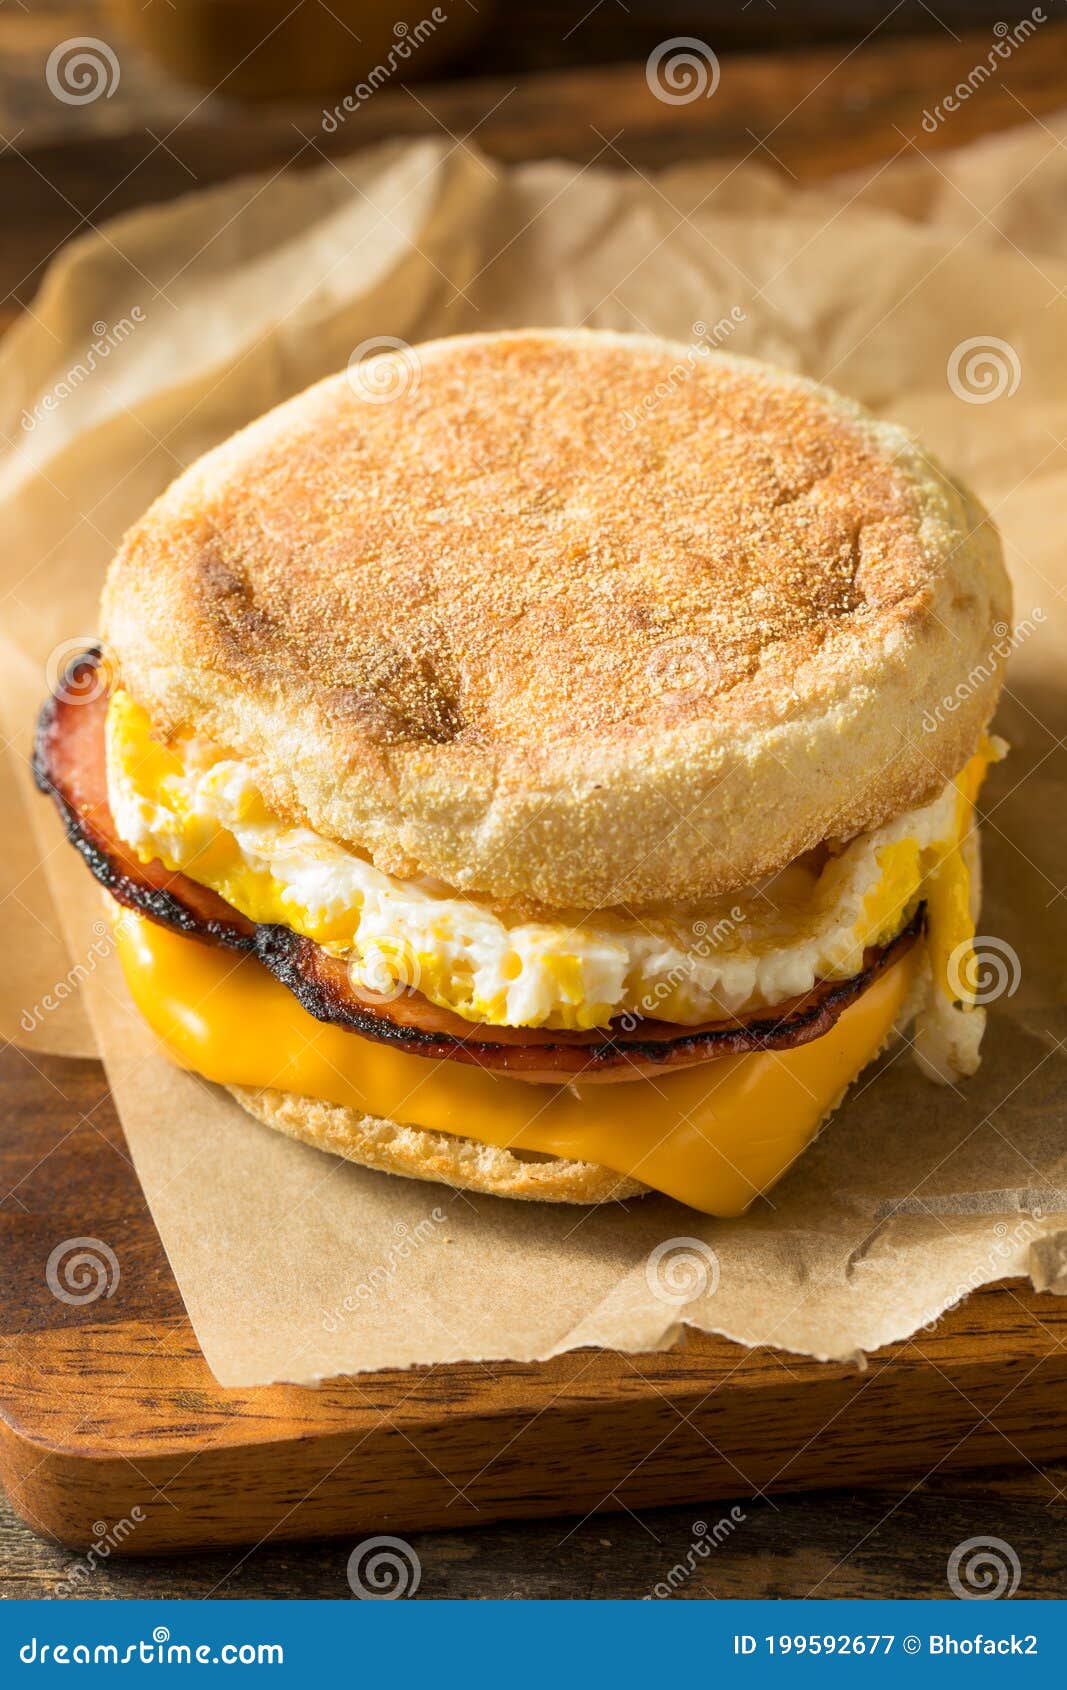 homemade egg english muffin sandwich